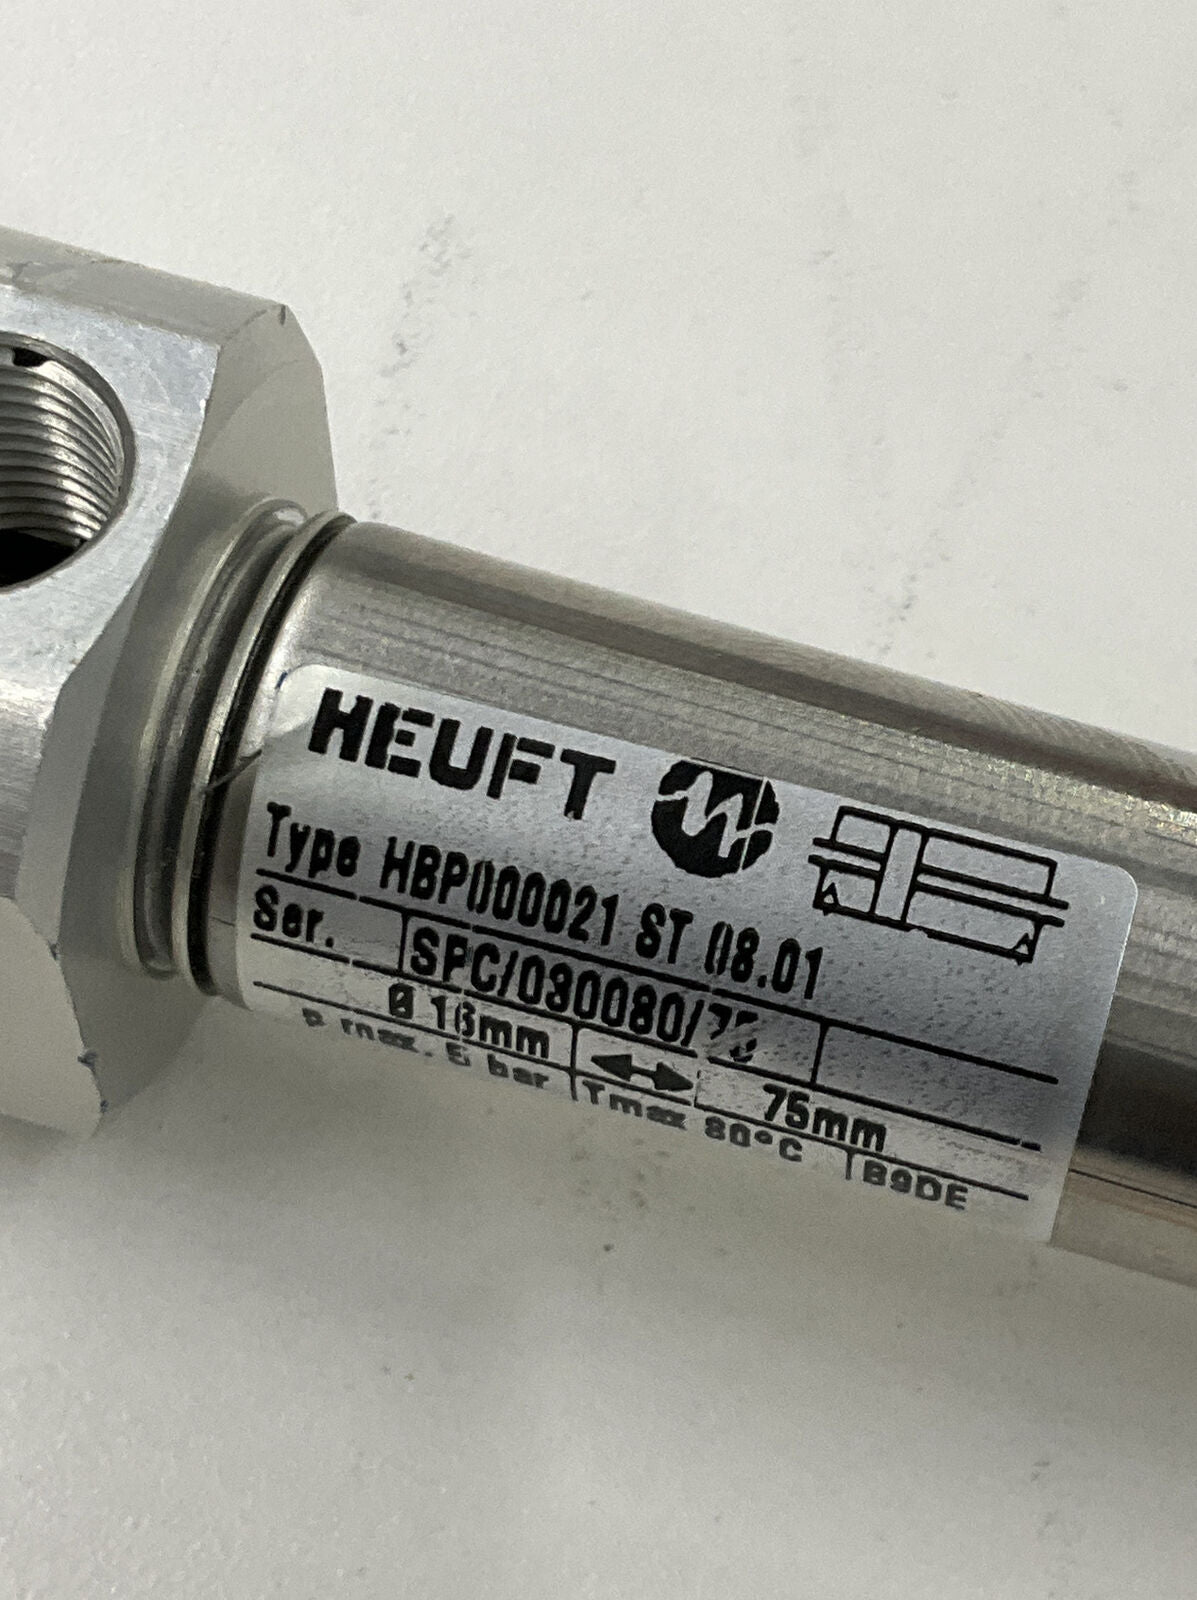 Heuft  HBP000021 Pneumatic Cylinder 16mm-75mm  (GR225) - 0